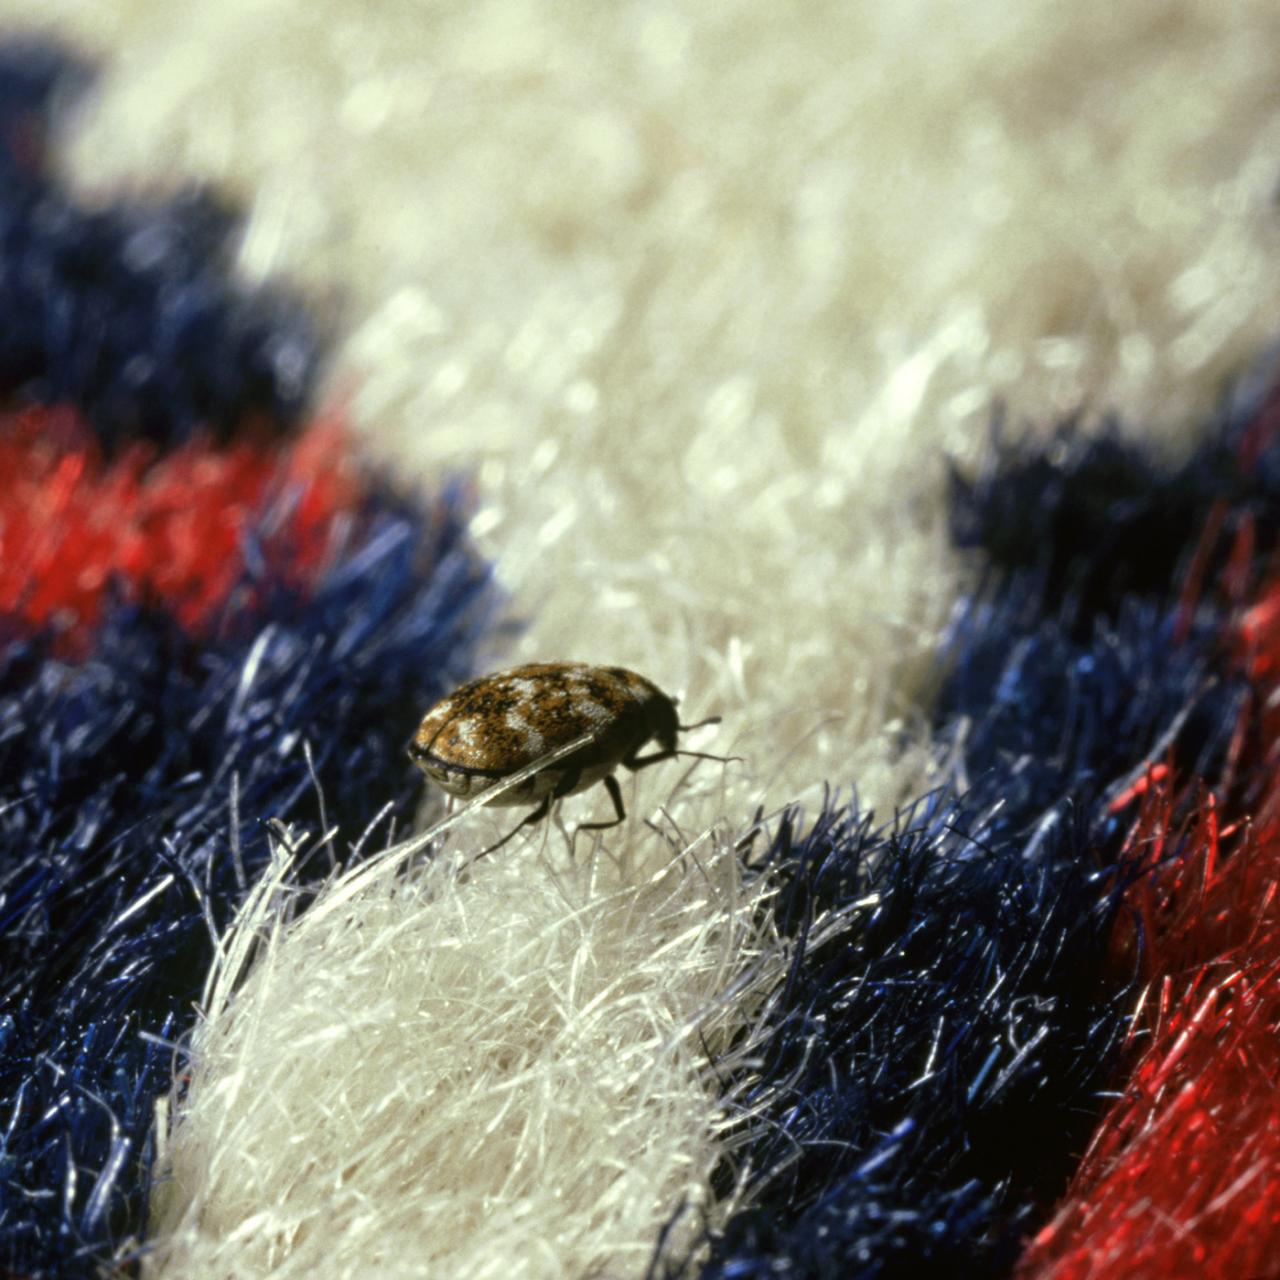 How To Get Rid Of Carpet Beetles | Hgtv